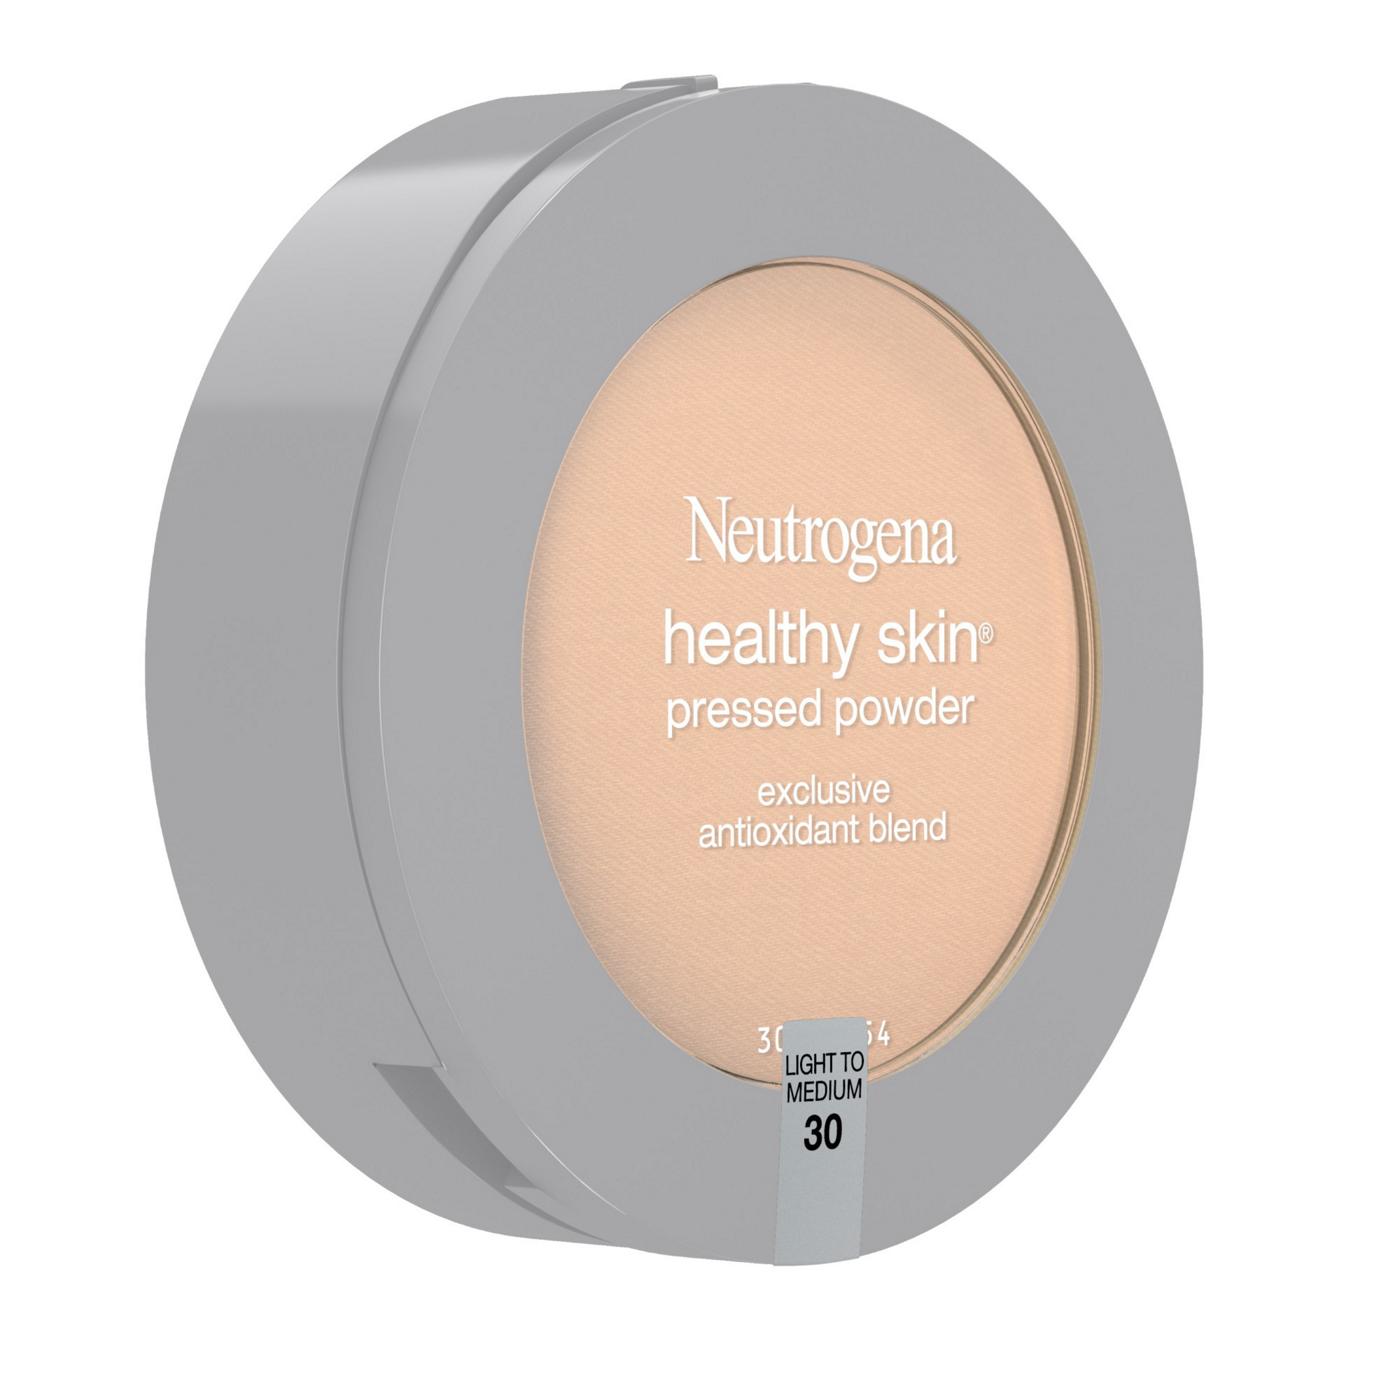 Neutrogena Healthy Skin Pressed Powder 30 Light To Medium; image 3 of 5